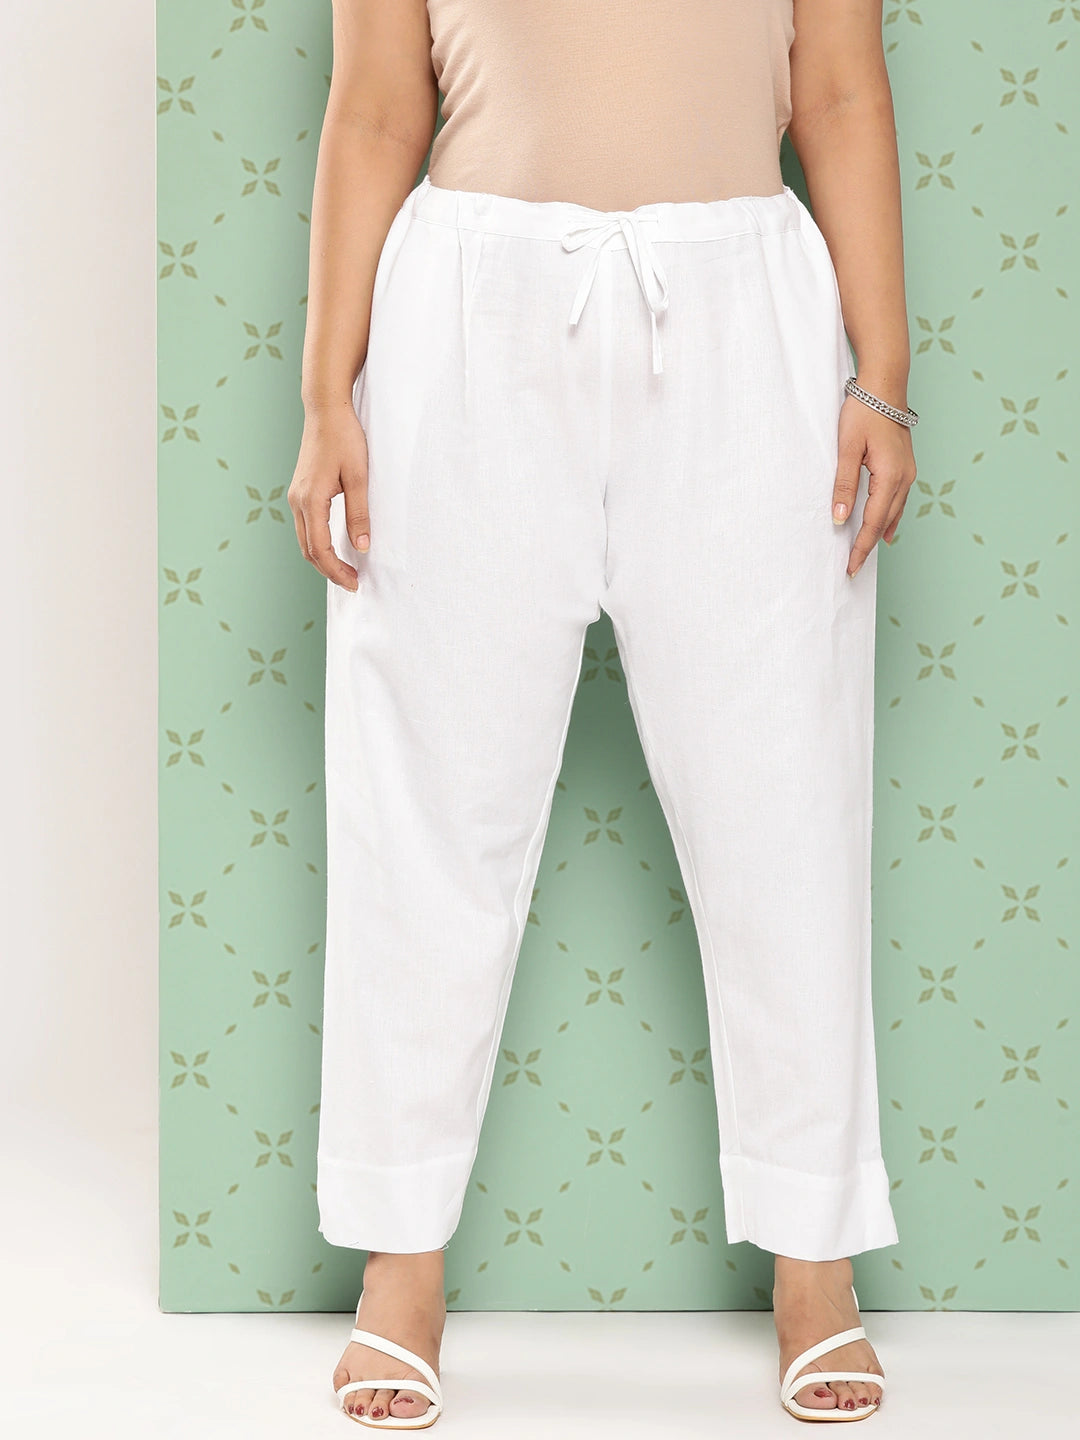 Women Plus Size White Cotton Ethnic Trousers-Yufta Store-4206PPNTWH3XL